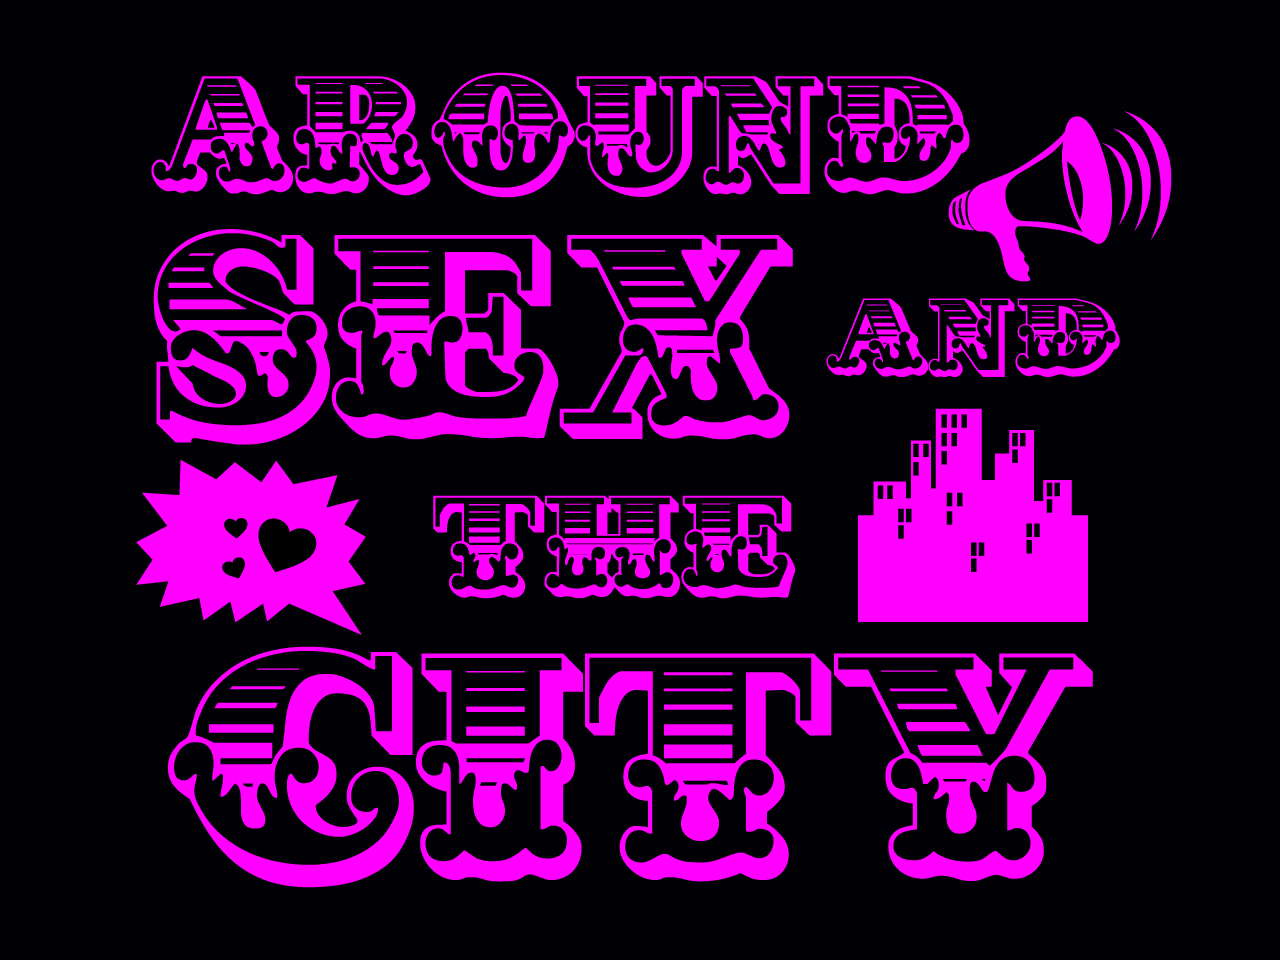 around SEX & the City